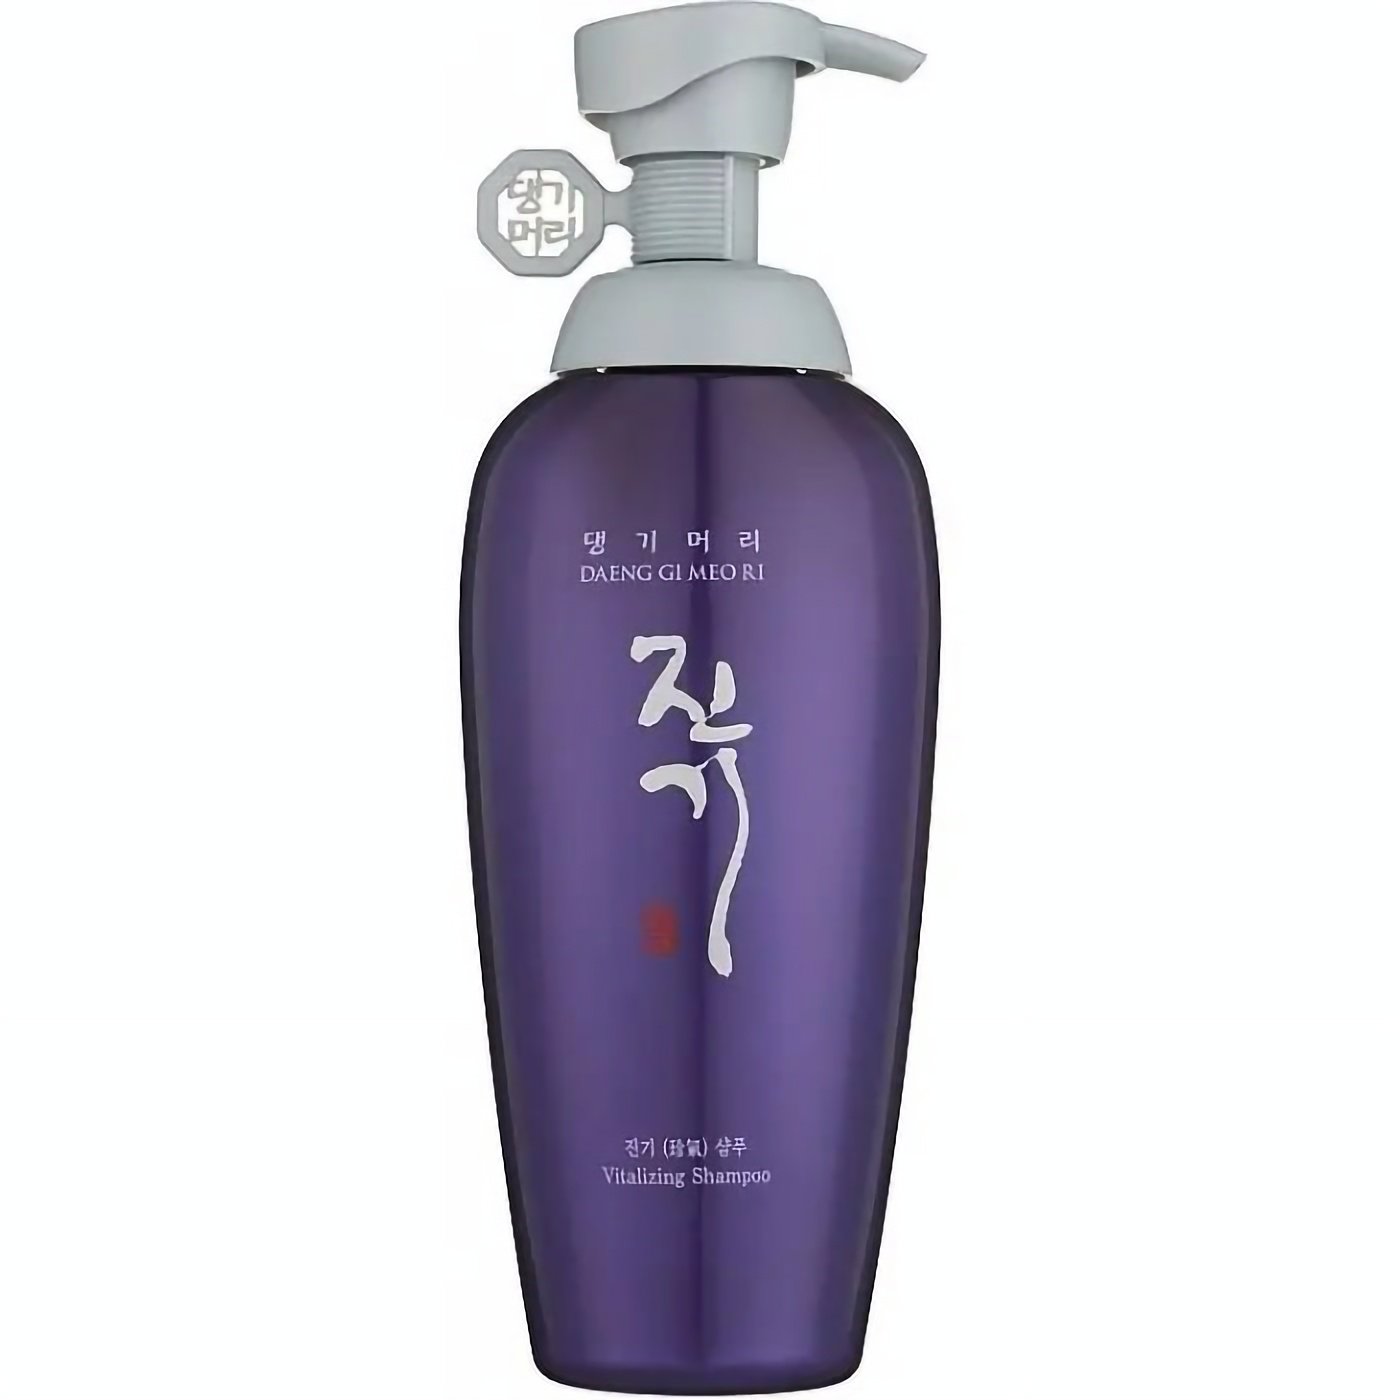 Шампунь для волос регенерирующий Daeng Gi Meo Ri Vitalizing Shampoo 500 мл - фото 1